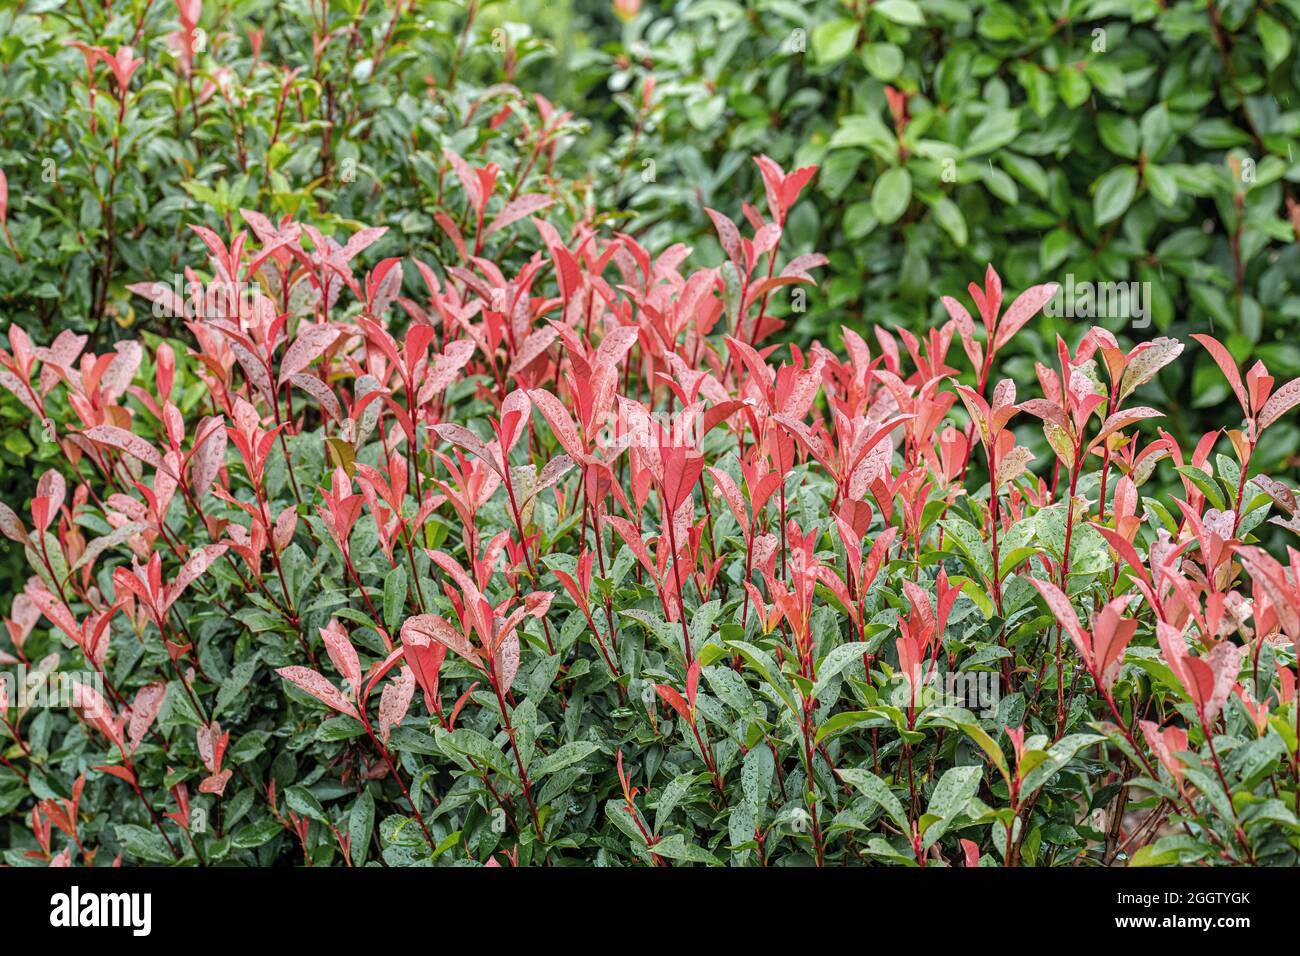 Fraser photinia (Photinia x fraseri 'Carré Rouge', Photinia x fraseri Carré Rouge, Photinia fraseri), leaves of cultivar Carré Rouge, Germany Stock Photo